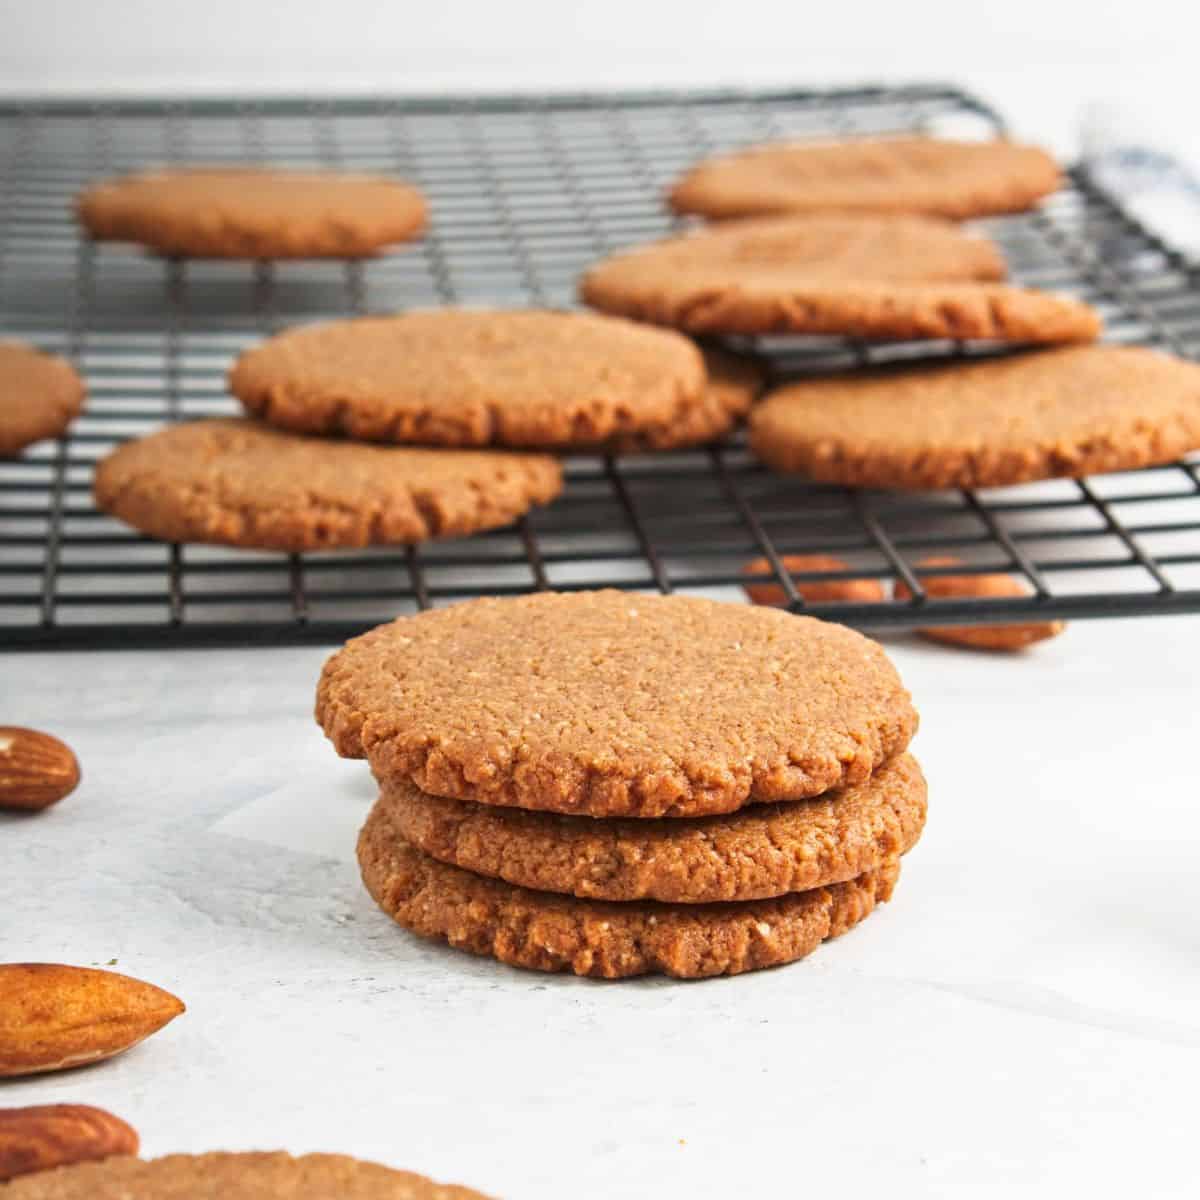 Easy Almond Flour Cookies (vegan)